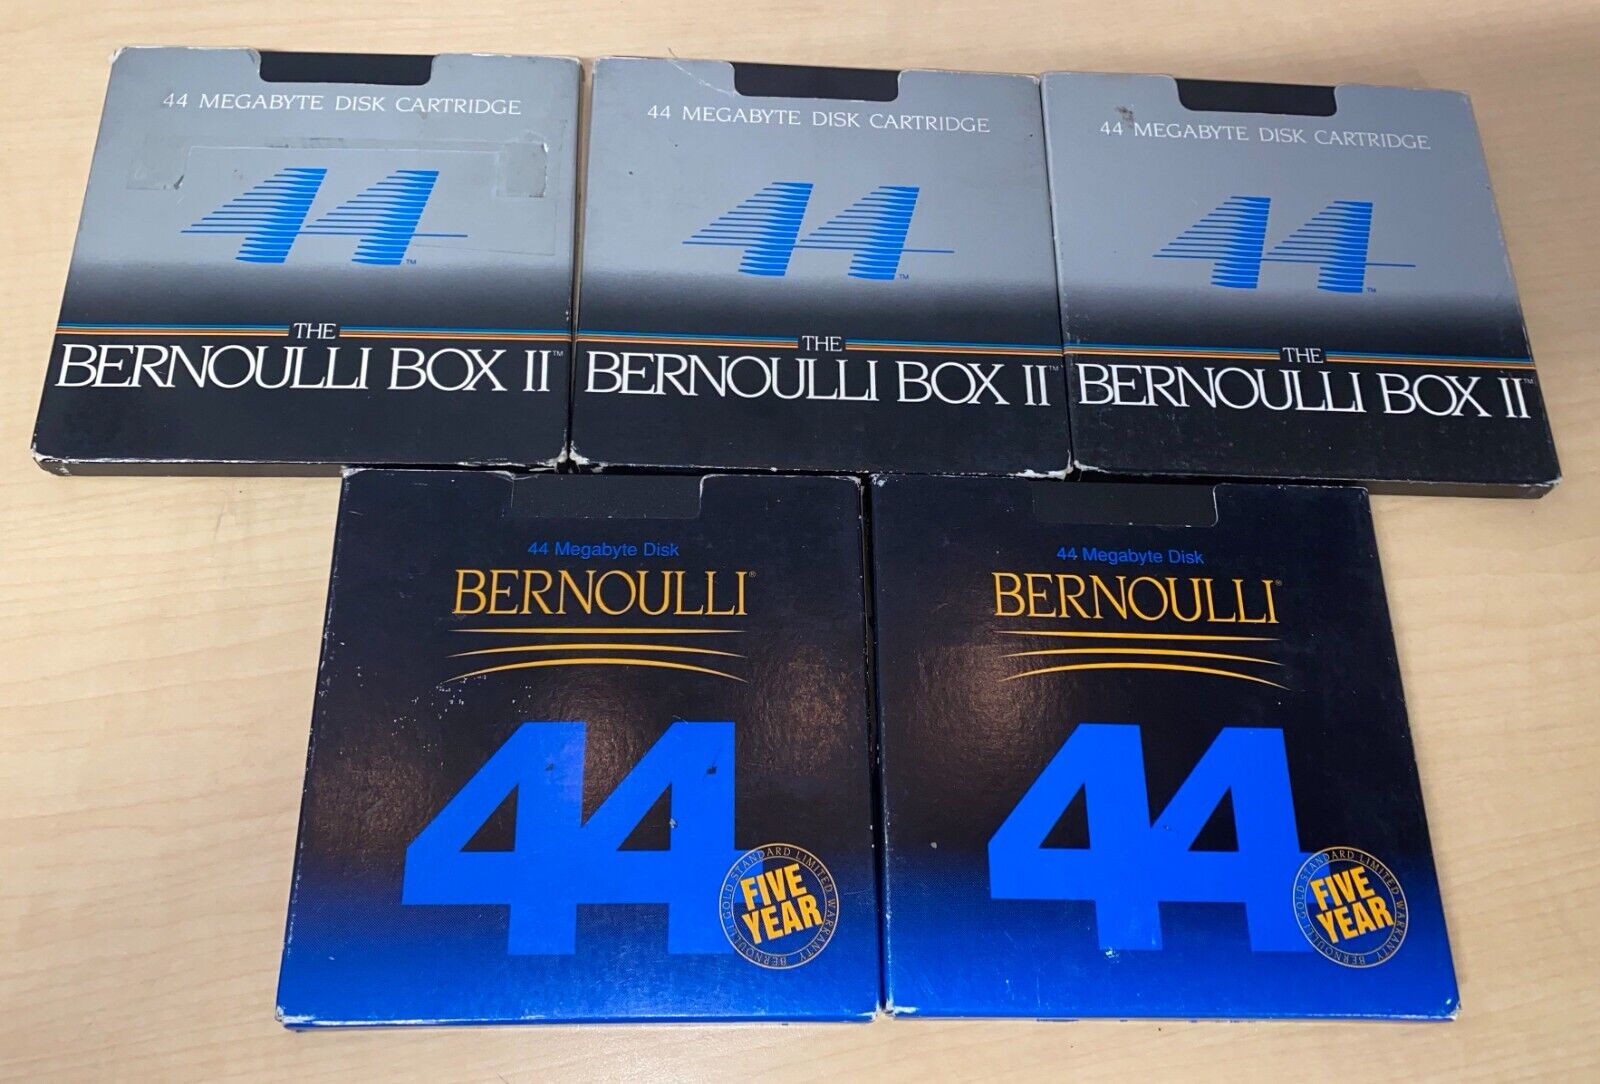 Lot of 5 Iomega Bernoulli Box II High-Capacity 44 Megabyte 44Mb Disk Software KL